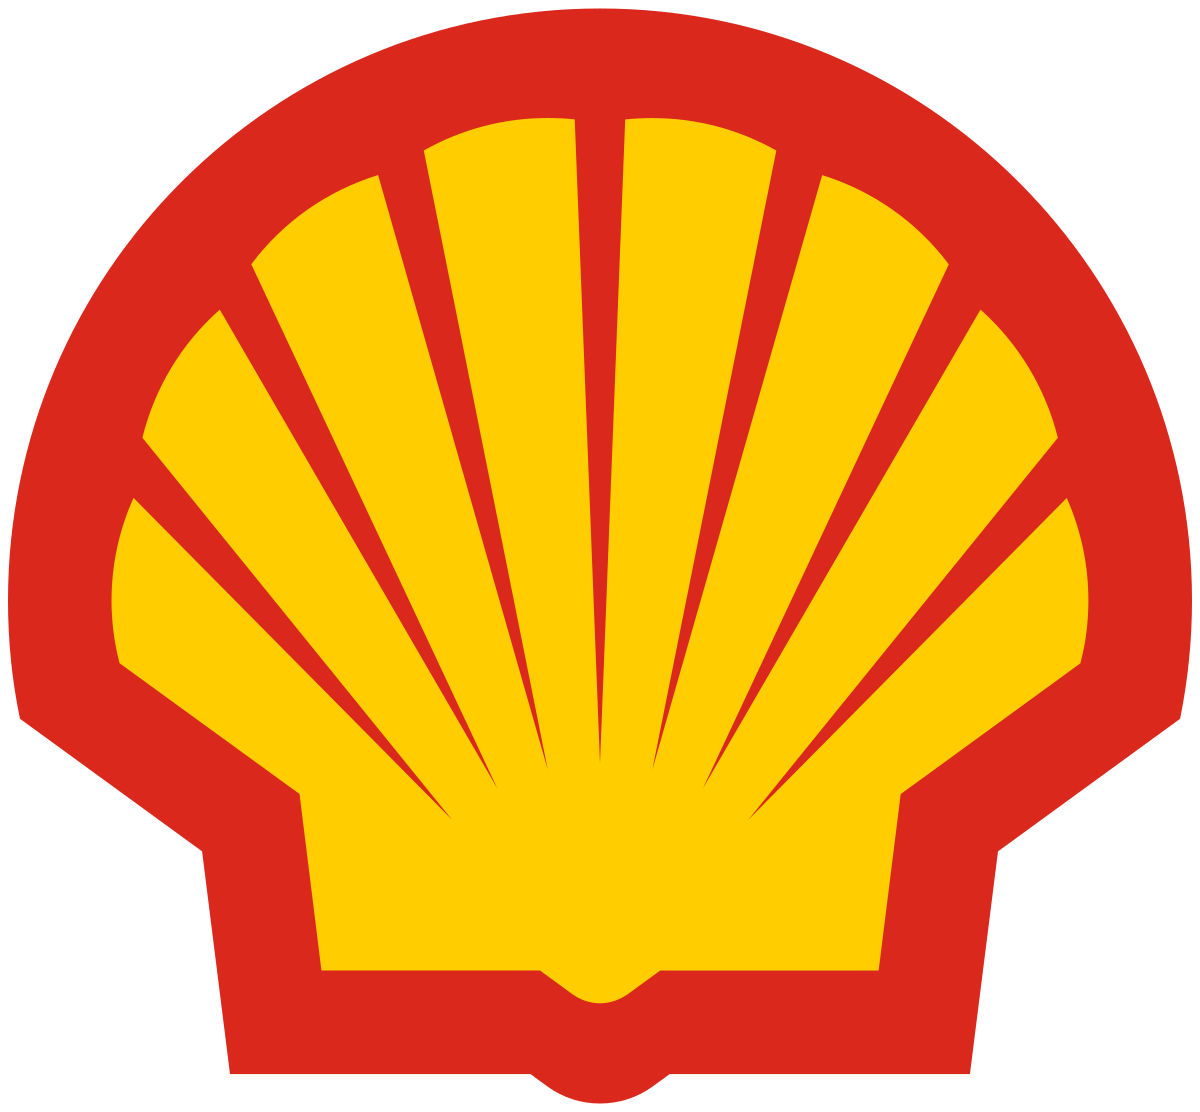 Image result for shell oil